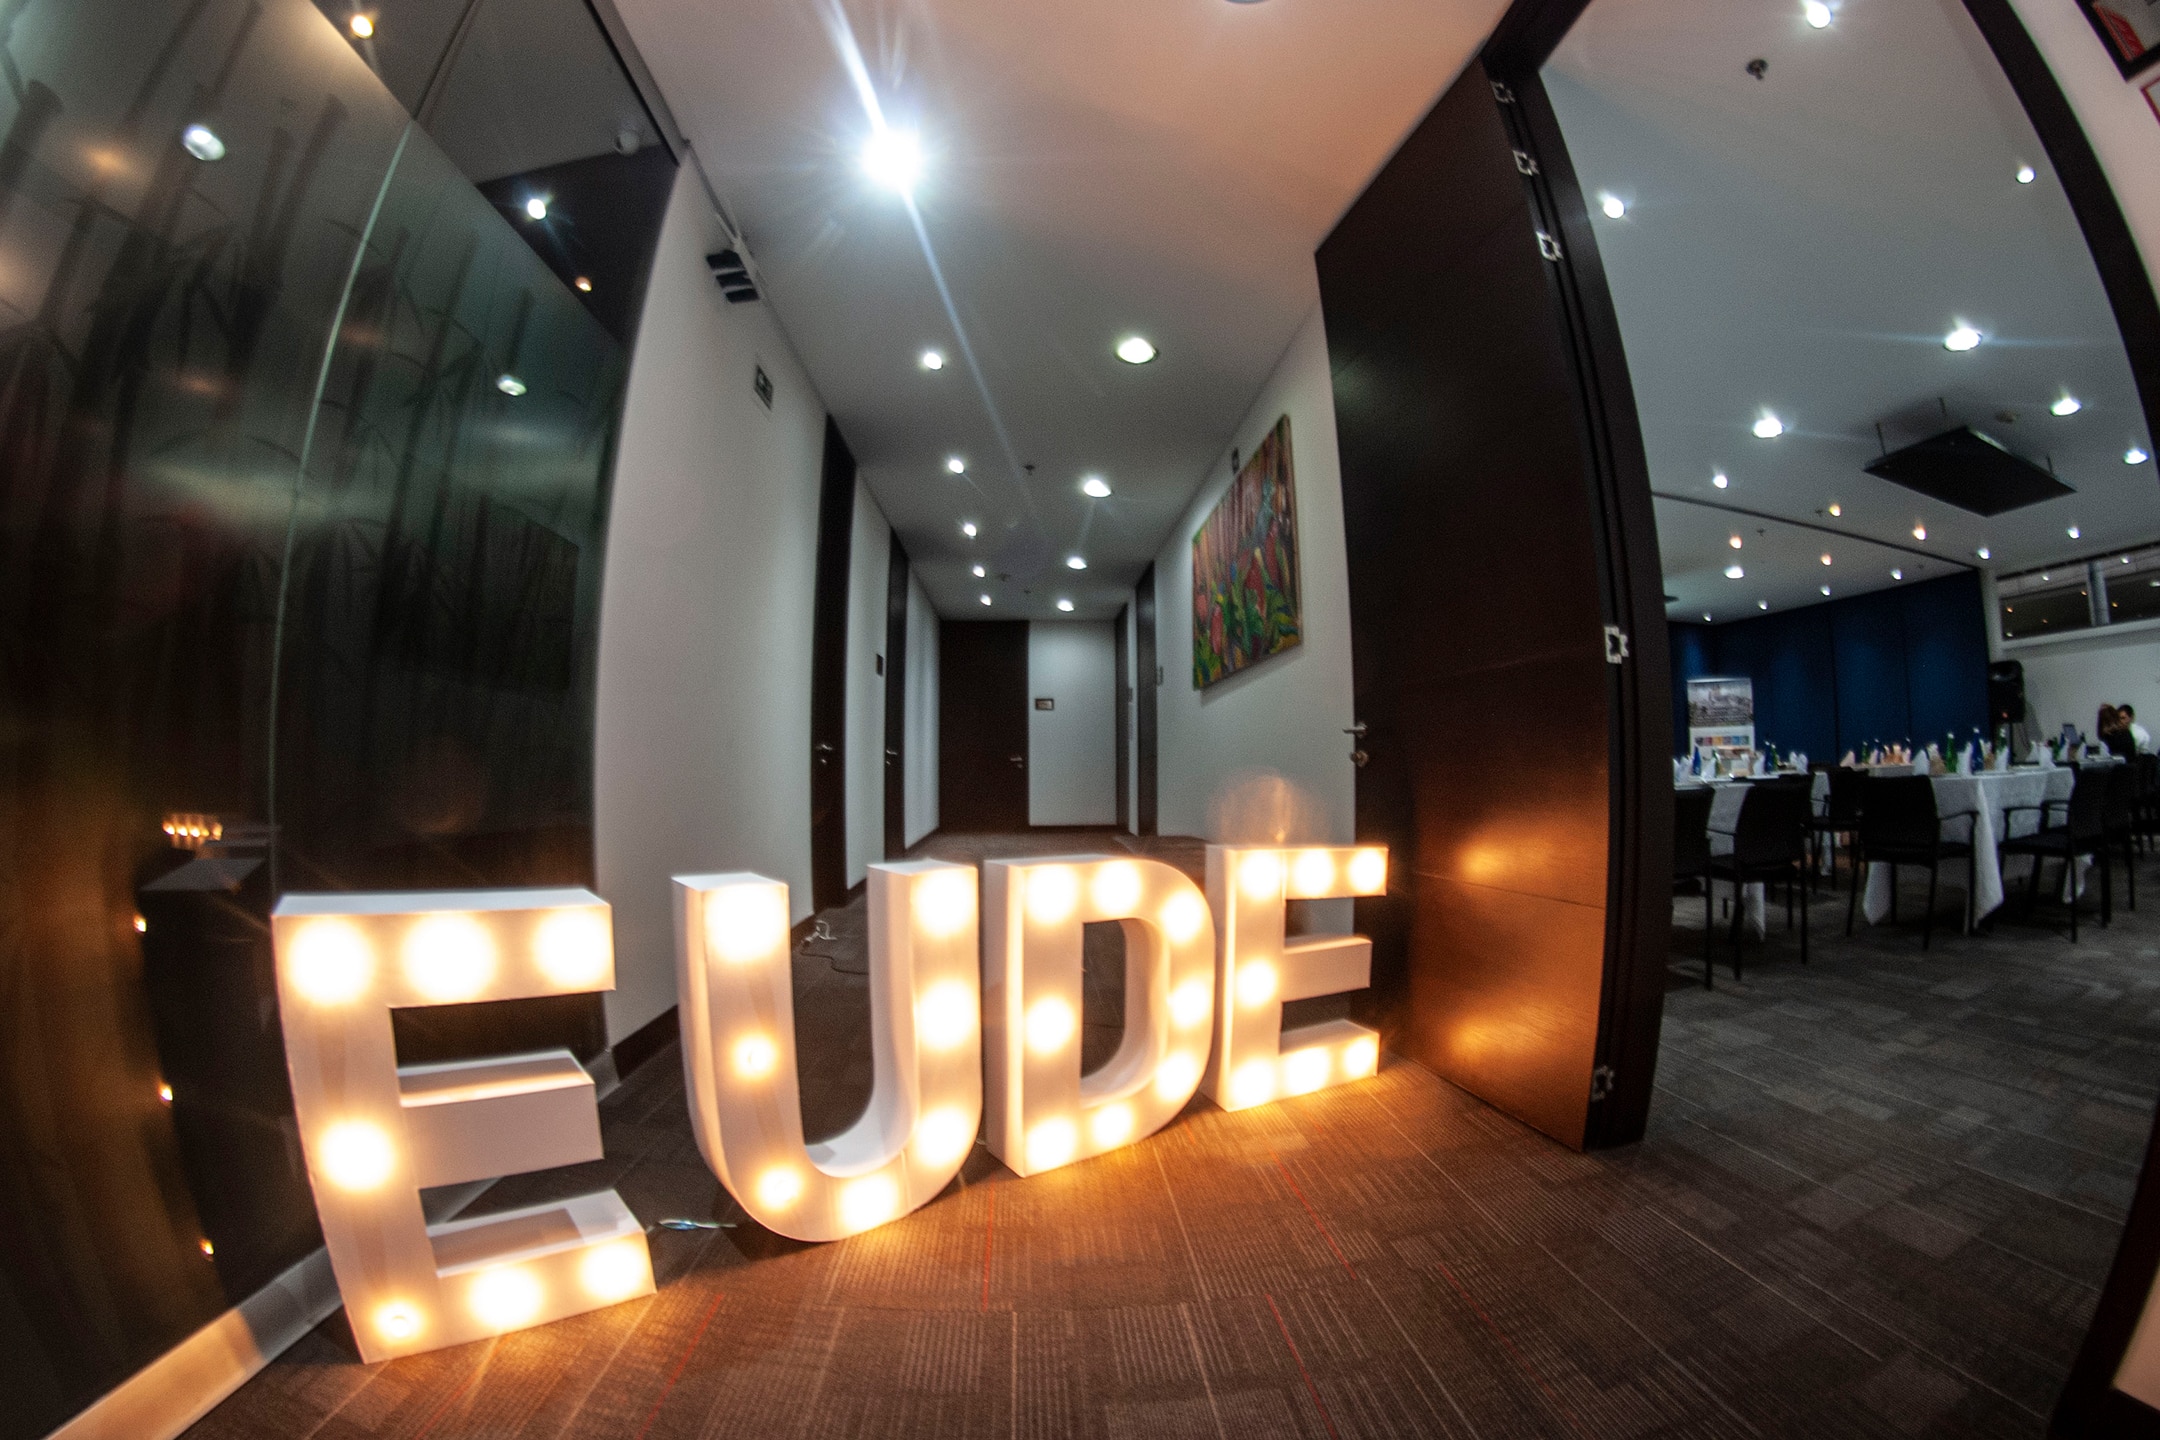 eude-lights-citylife-madrid